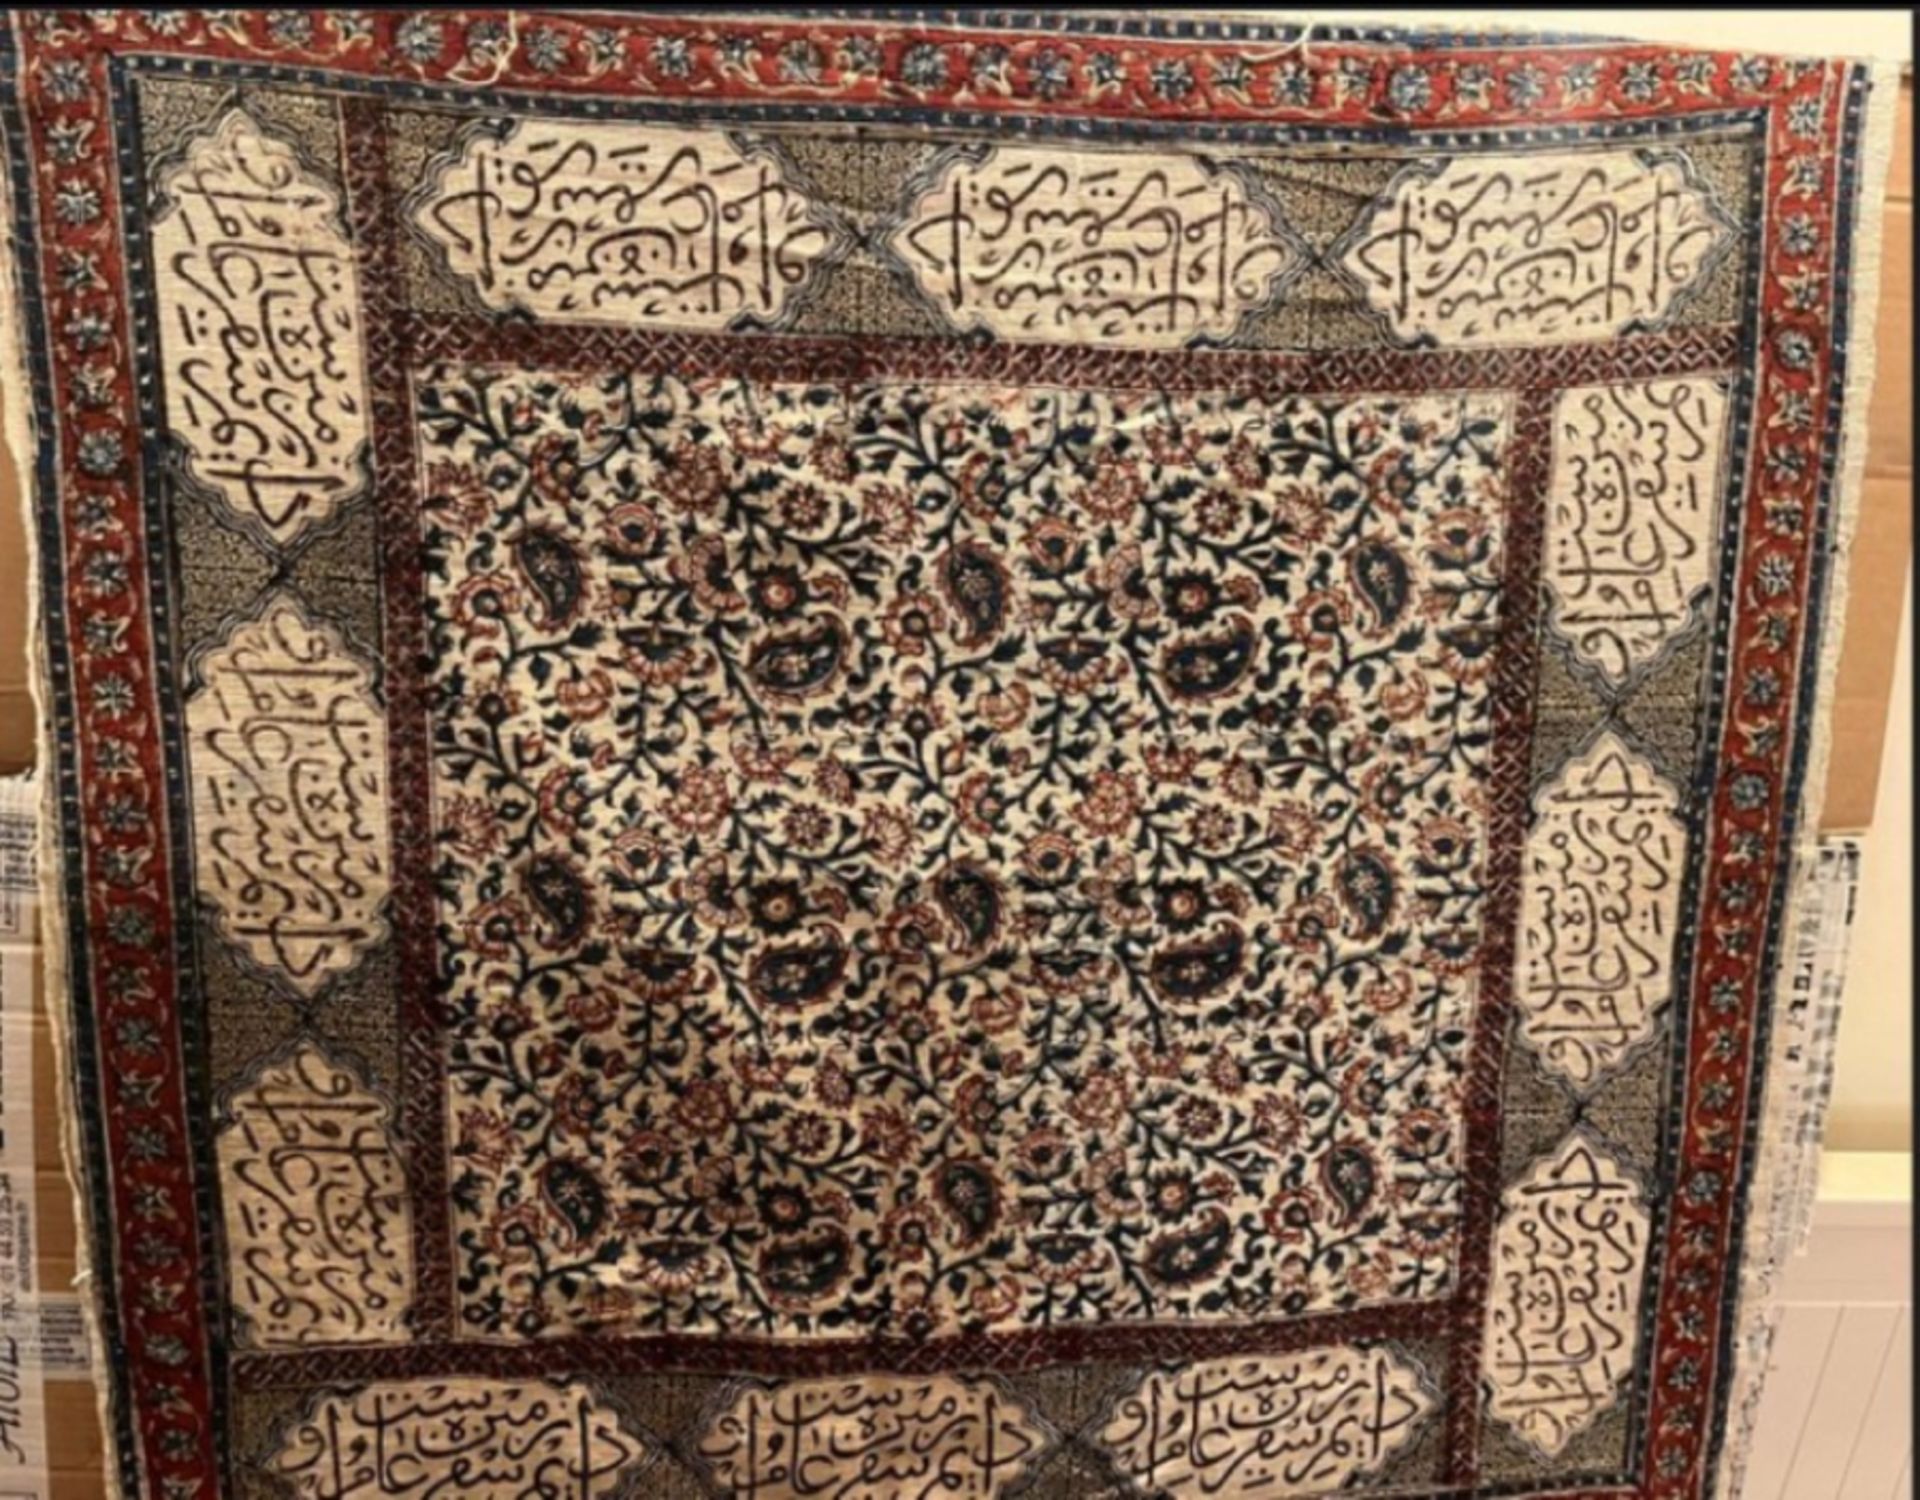 Kalamkari textile with islamic calligraphy - Image 5 of 12